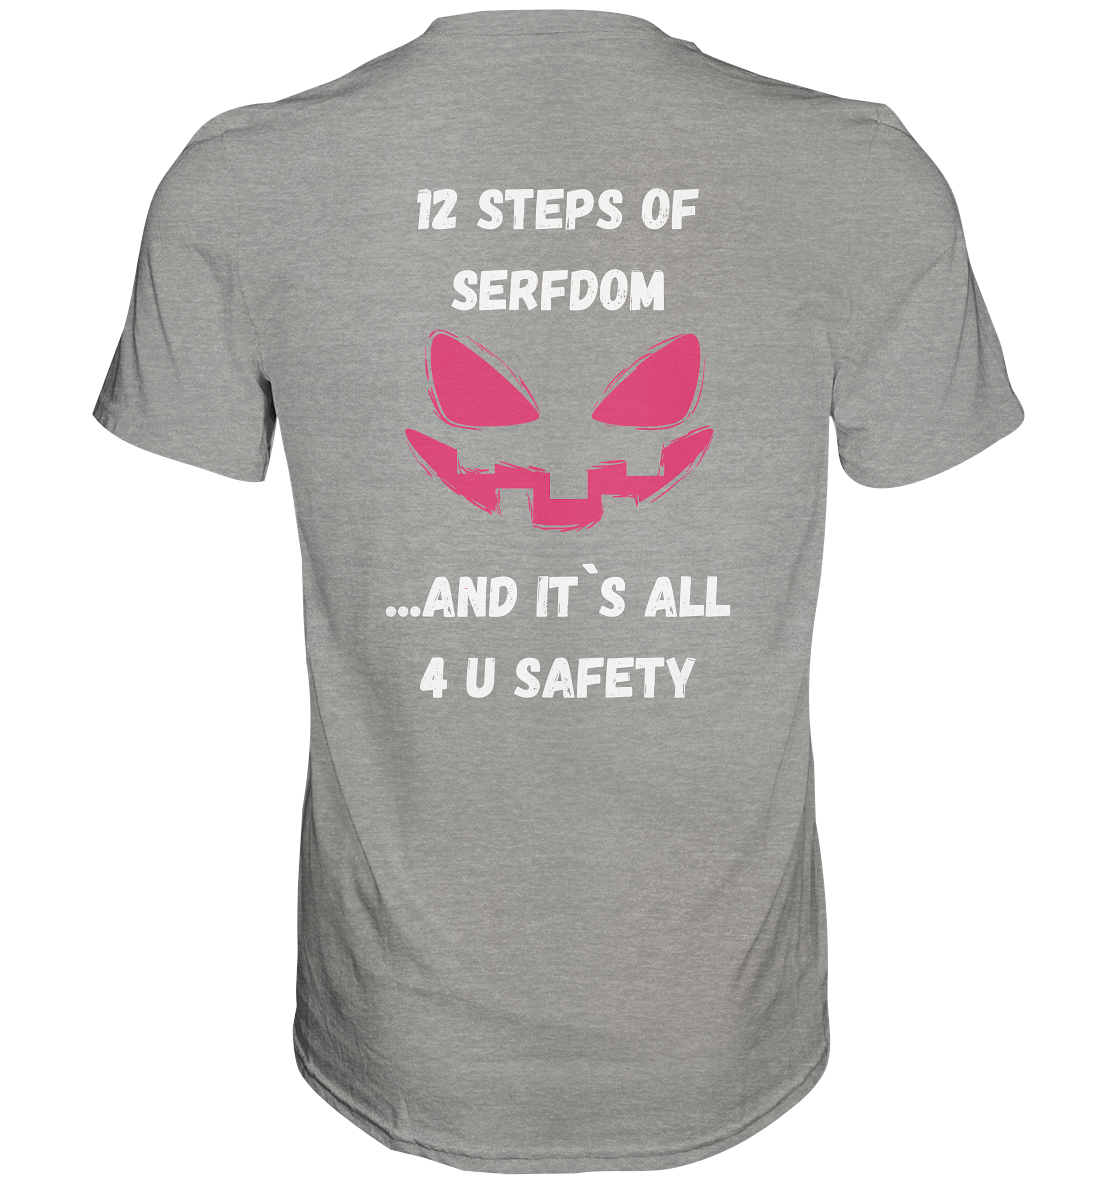 1st from 12 steps of serfdom - IT`S ALL 4 U SAFETY - RÜCKENDRUCK FARBIG (Herren, Men)  - Premium Shirt